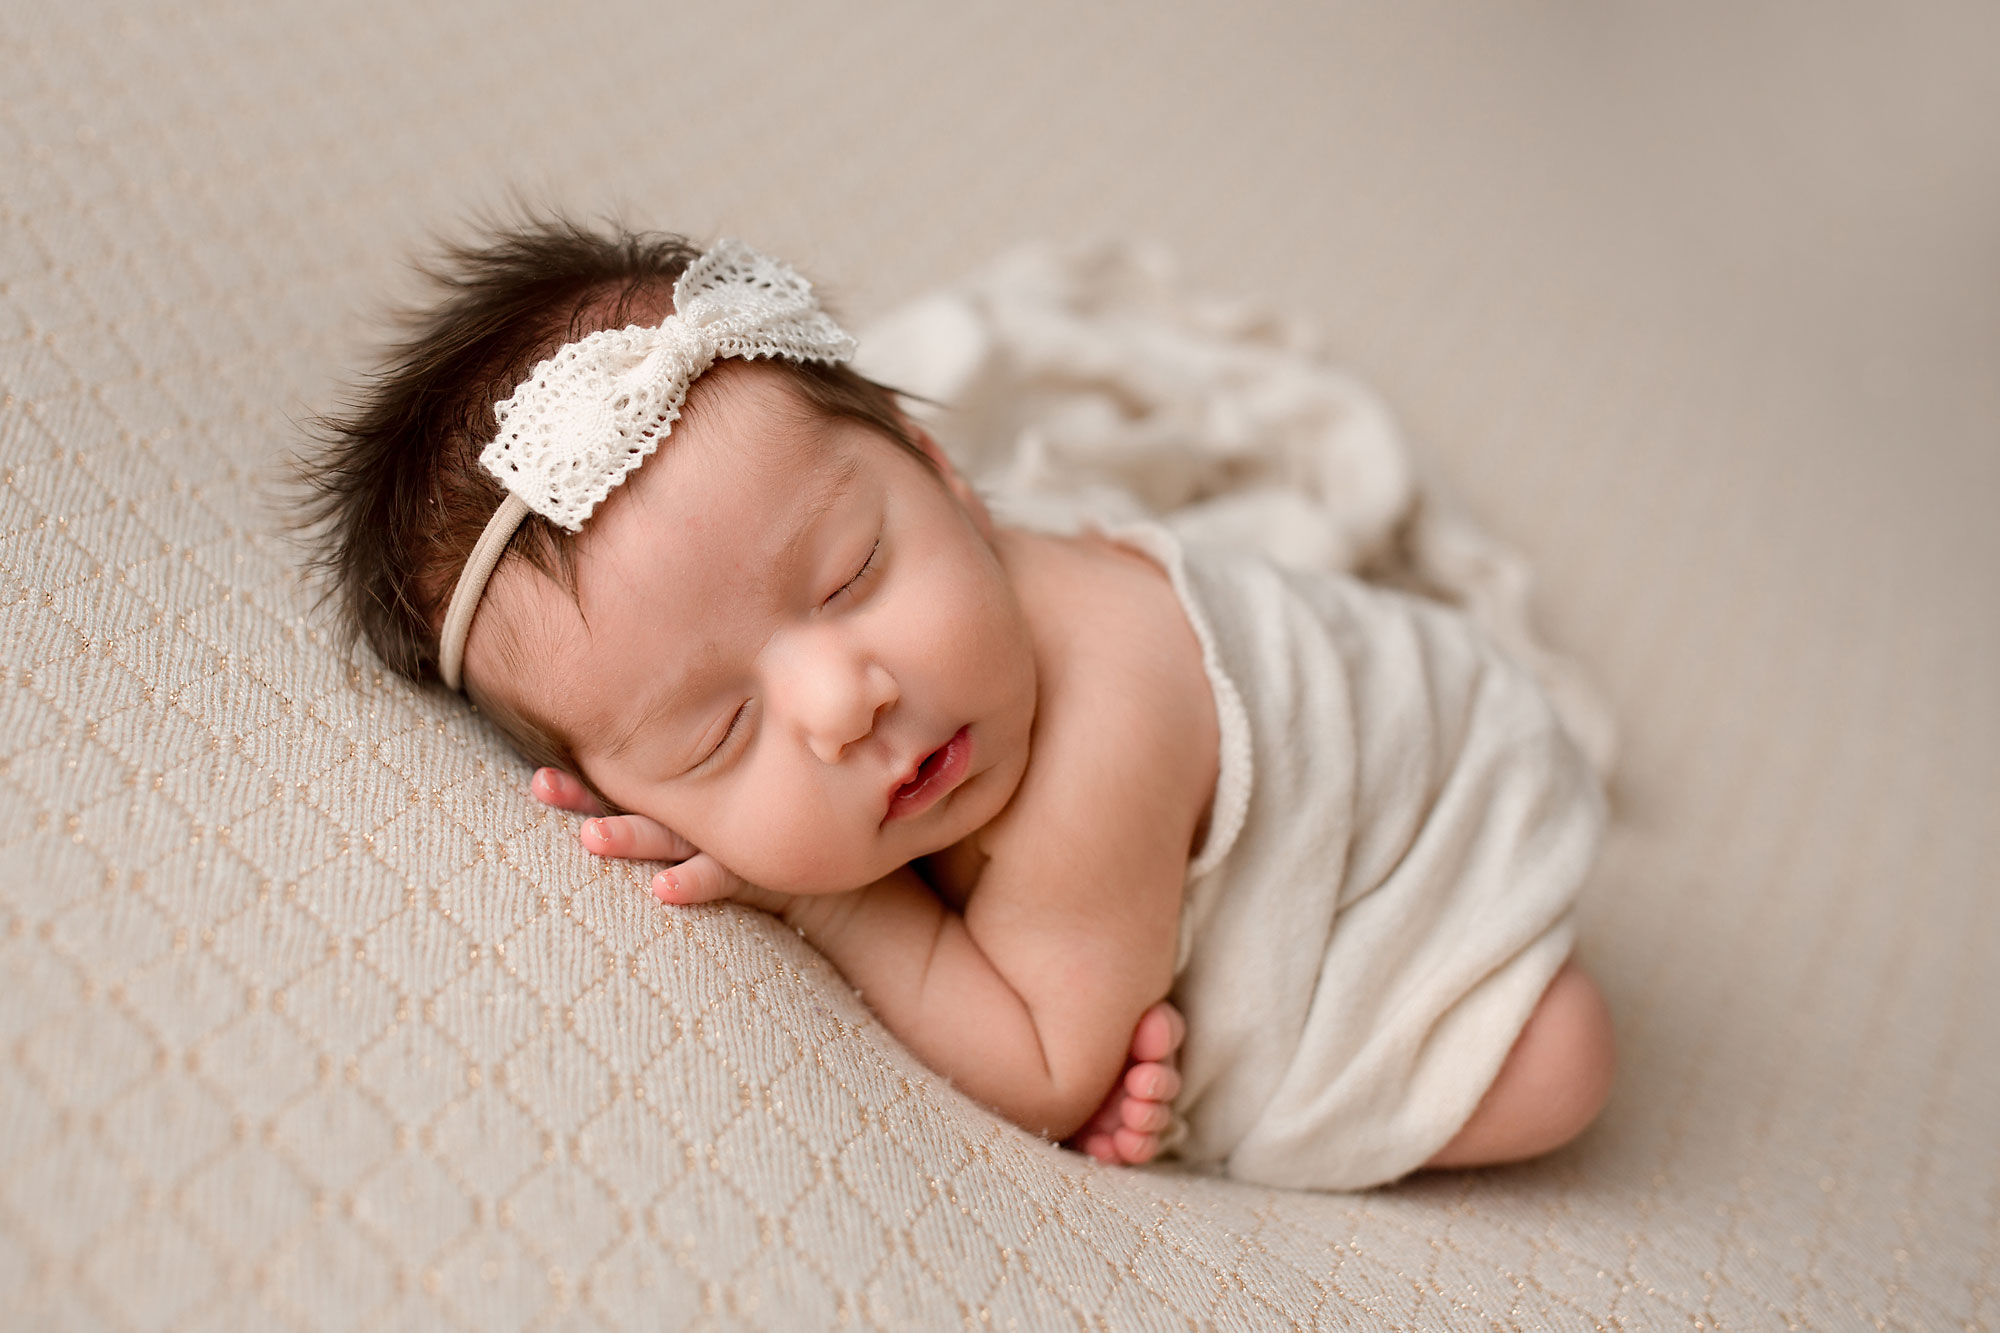 NJ newborn photographer capturing baby girl sleeping on a white blanket